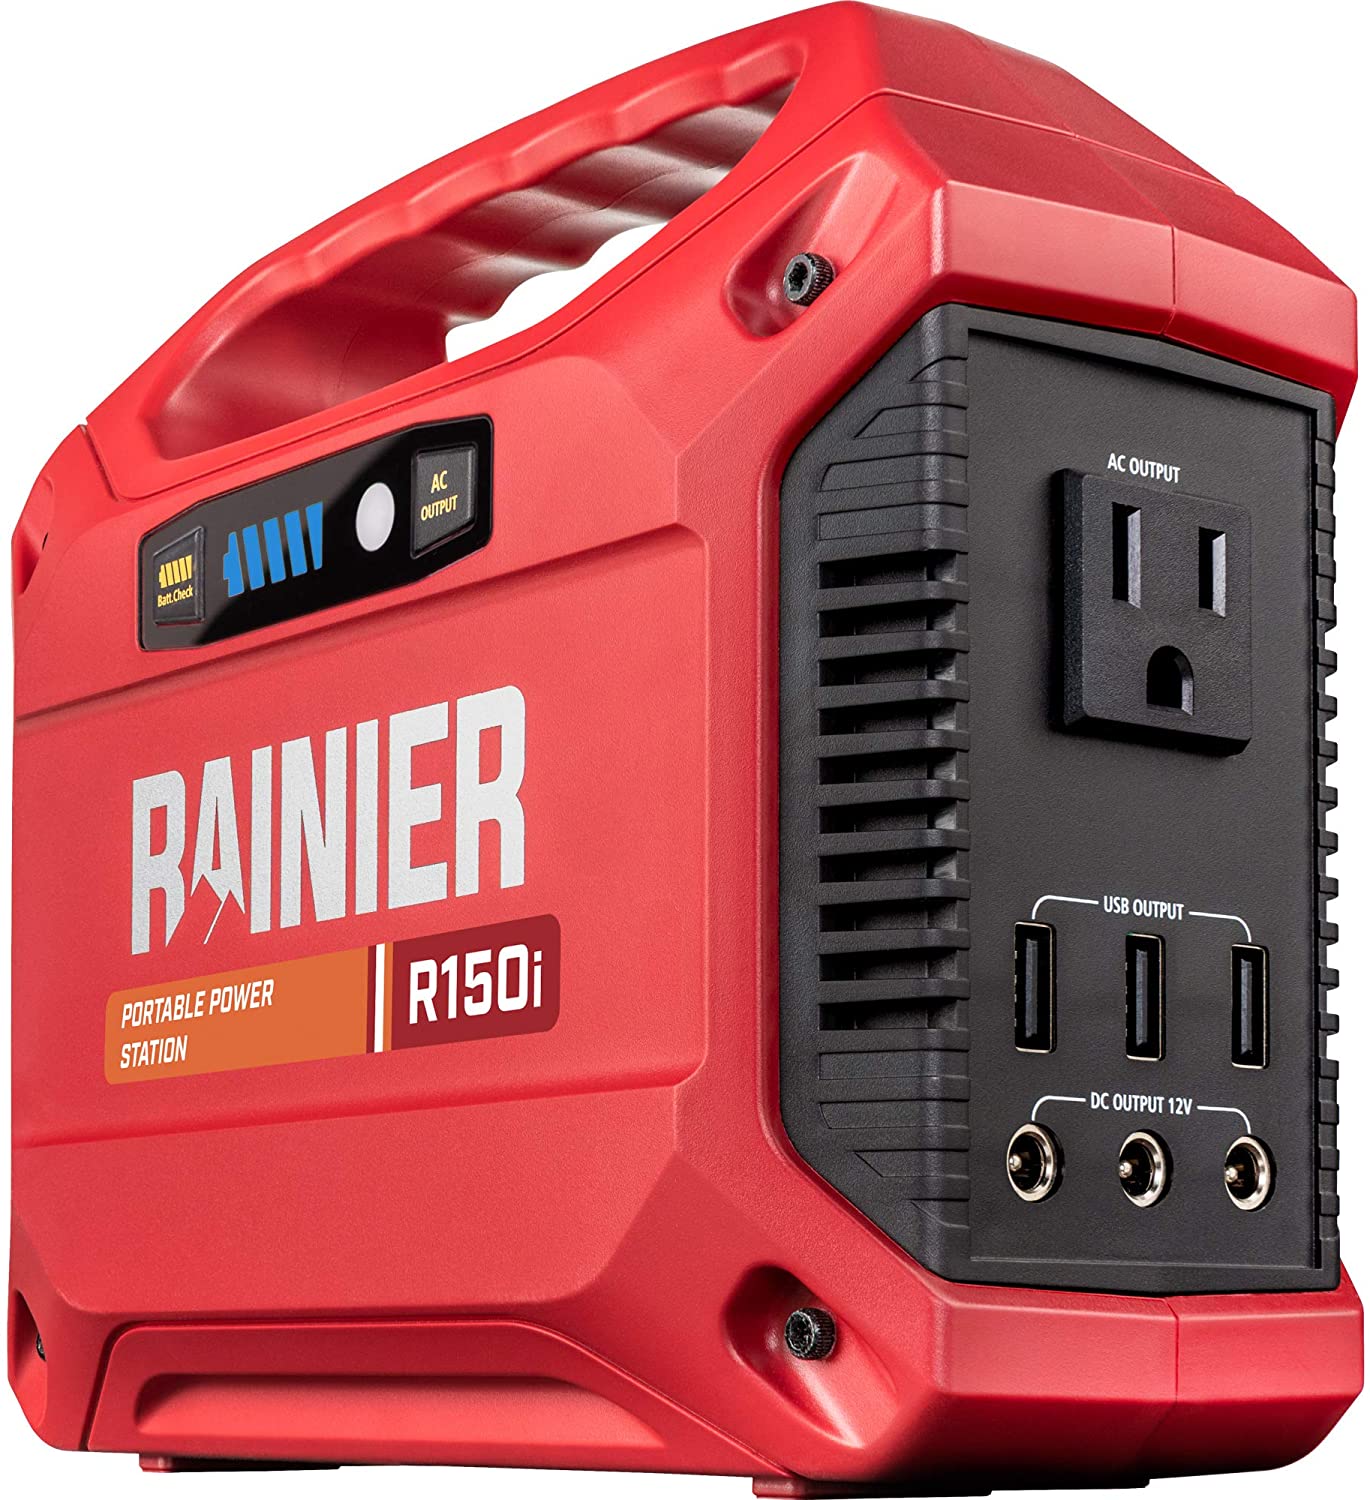 Rainier R150i